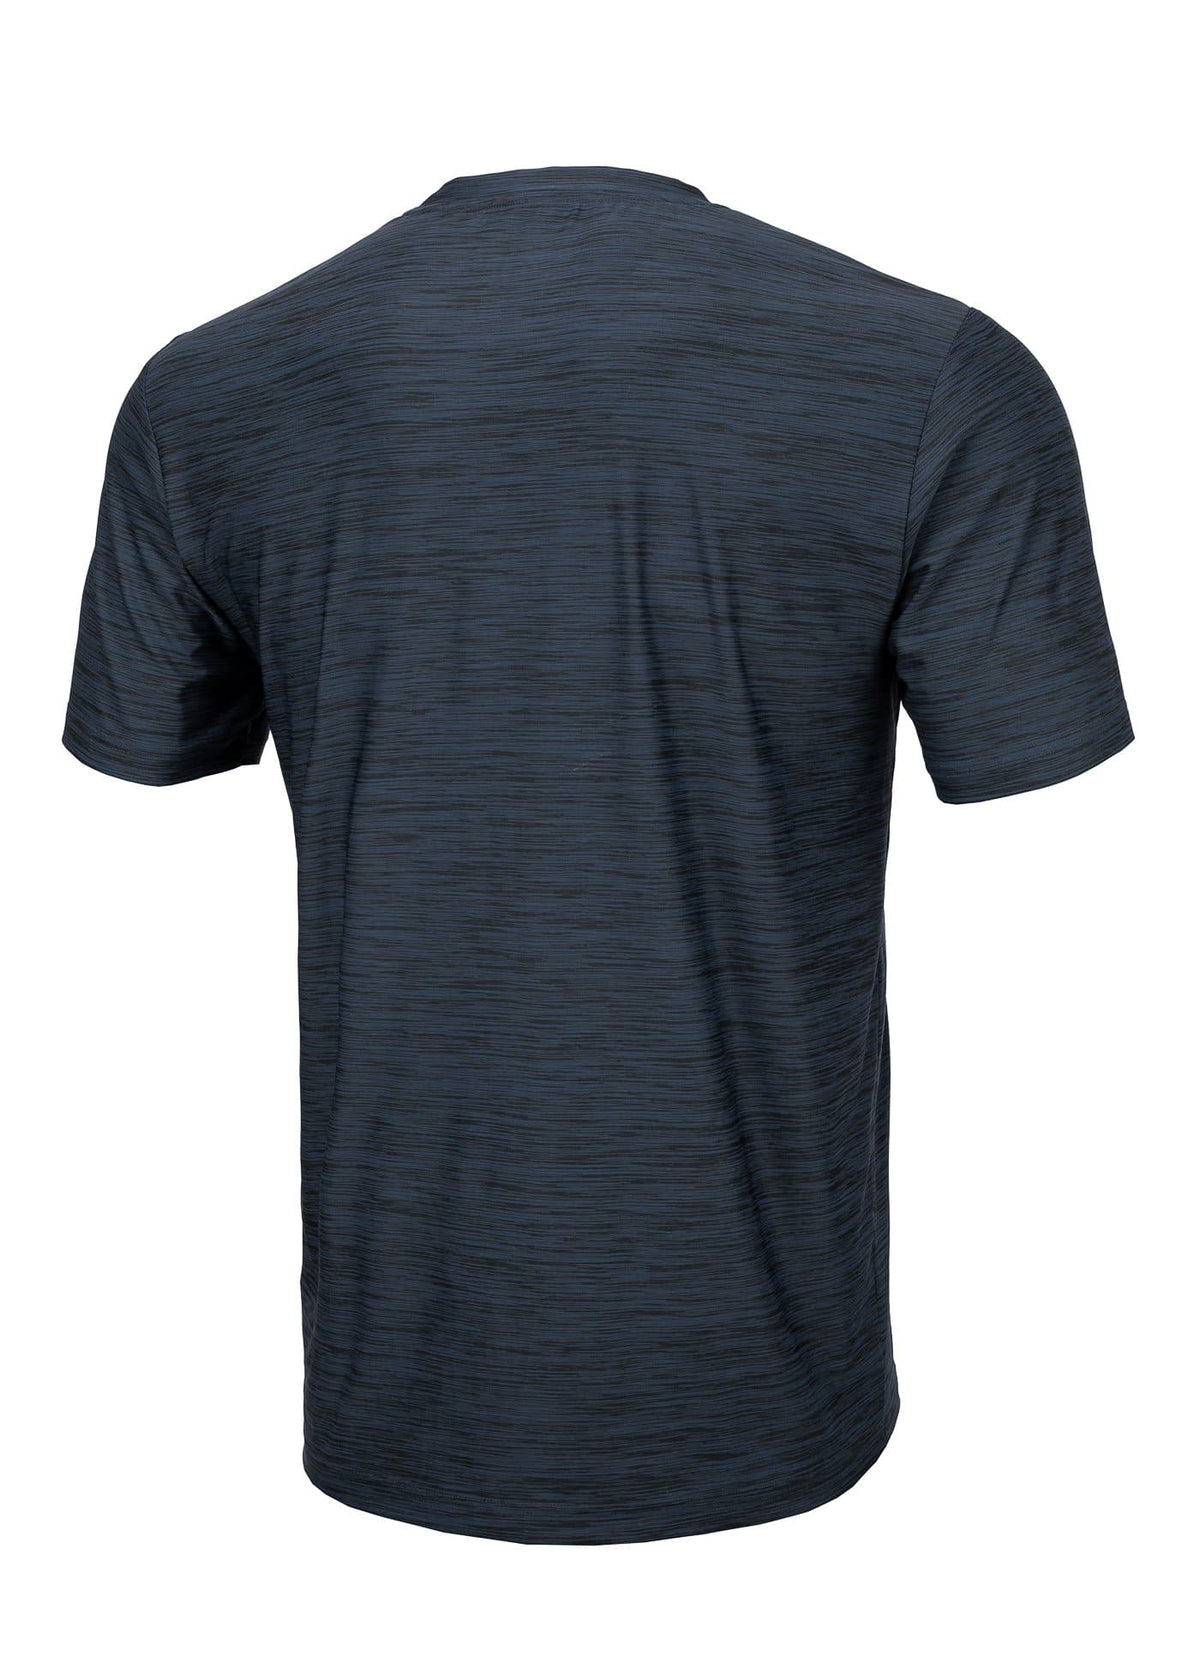 T-shirt Middleweight NO LOGO Navy Melange - Pitbull West Coast International Store 